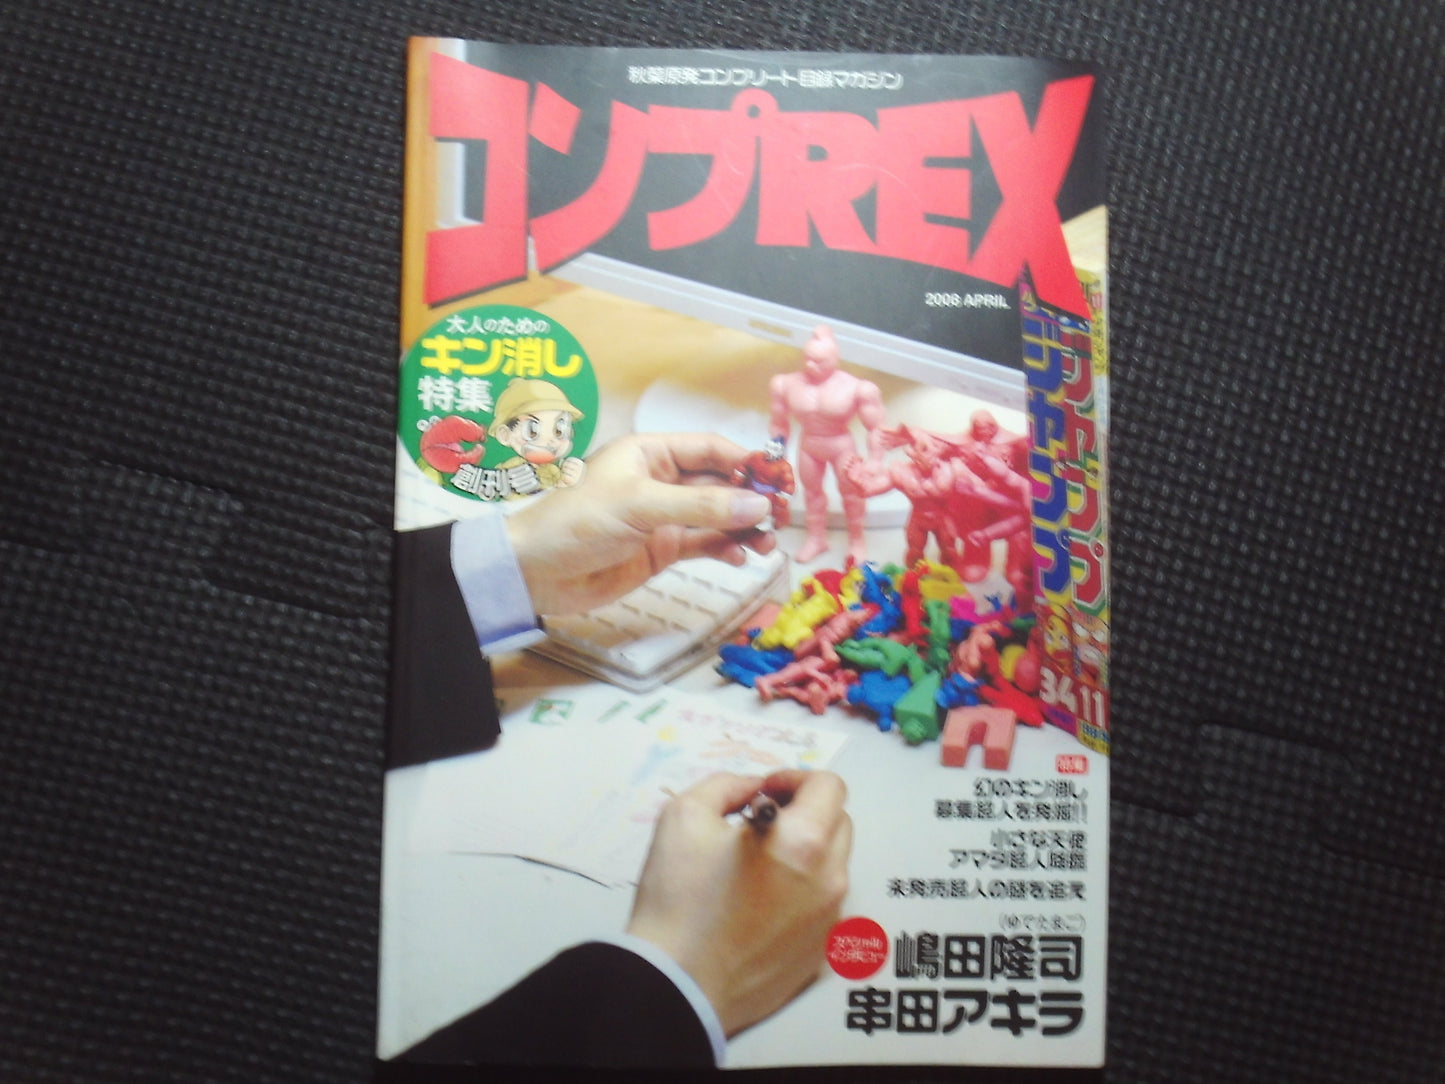 Comp-Rex #1 Japanese Collector Magazine - Japanese Rubber Keshi Keshigomu figure Kingkeshi.com